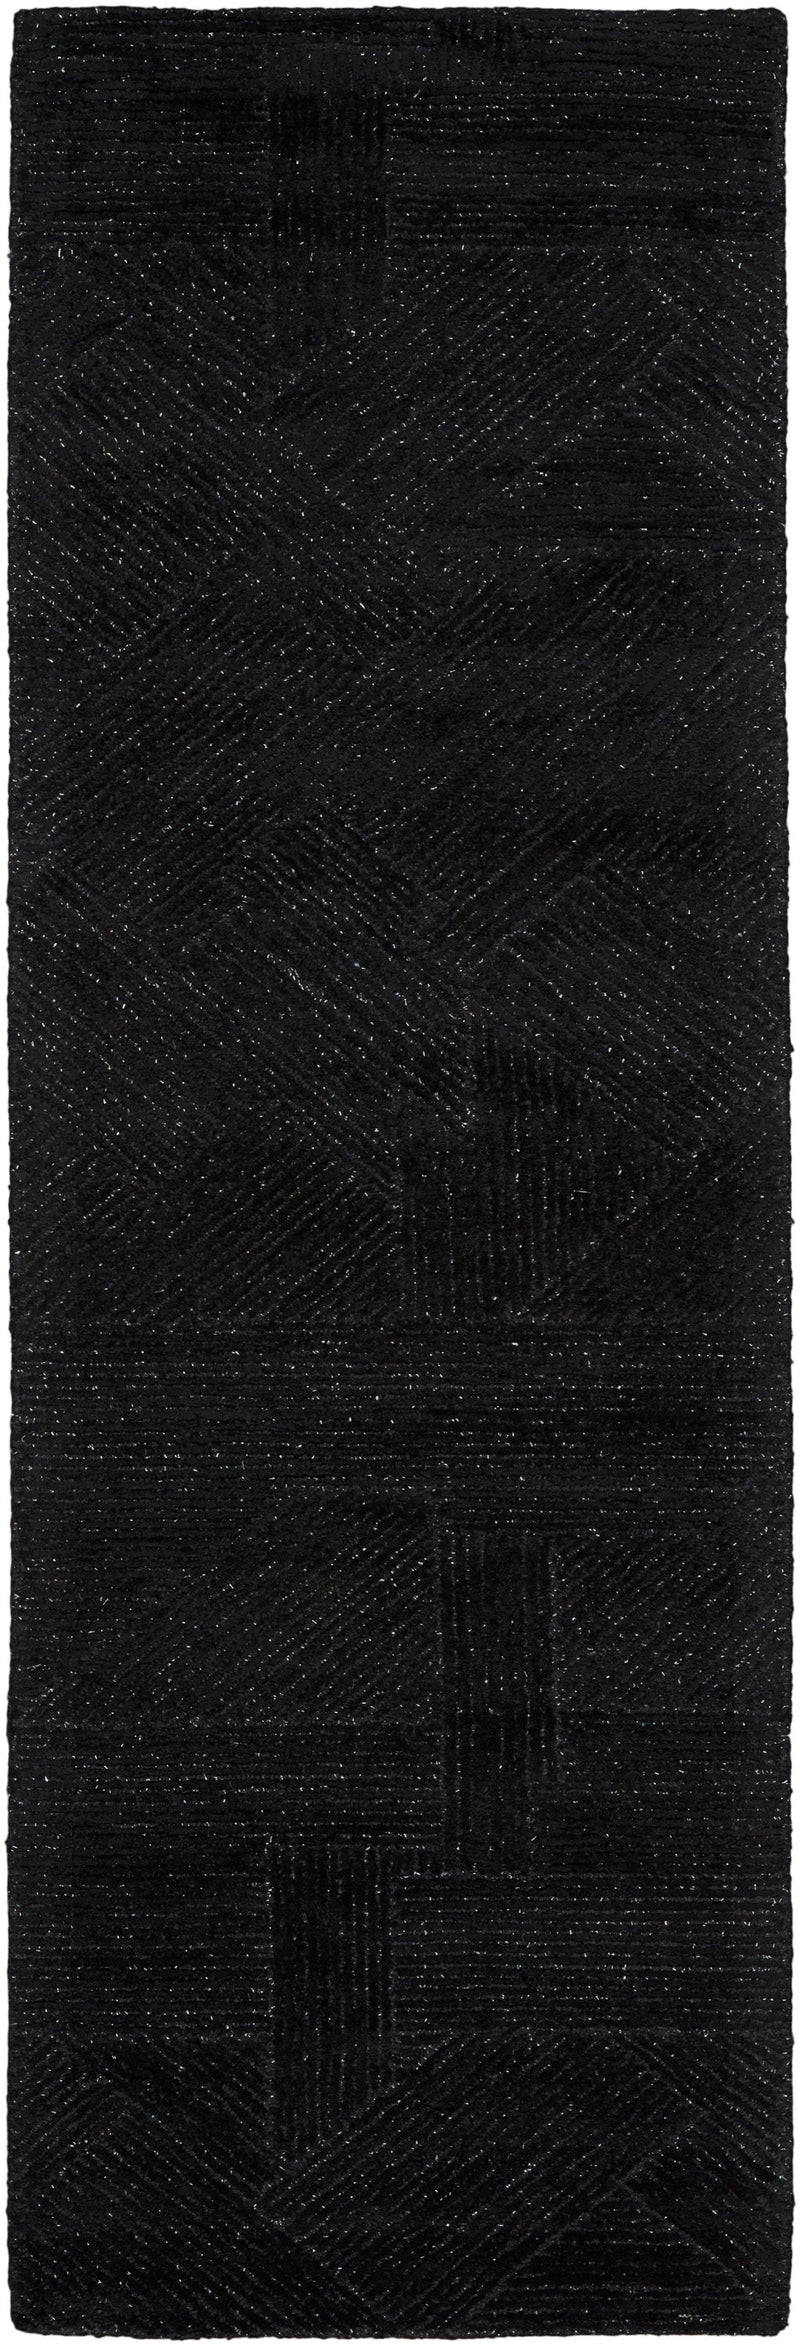 media image for ma30 star handmade black rug by nourison 99446880871 redo 2 286